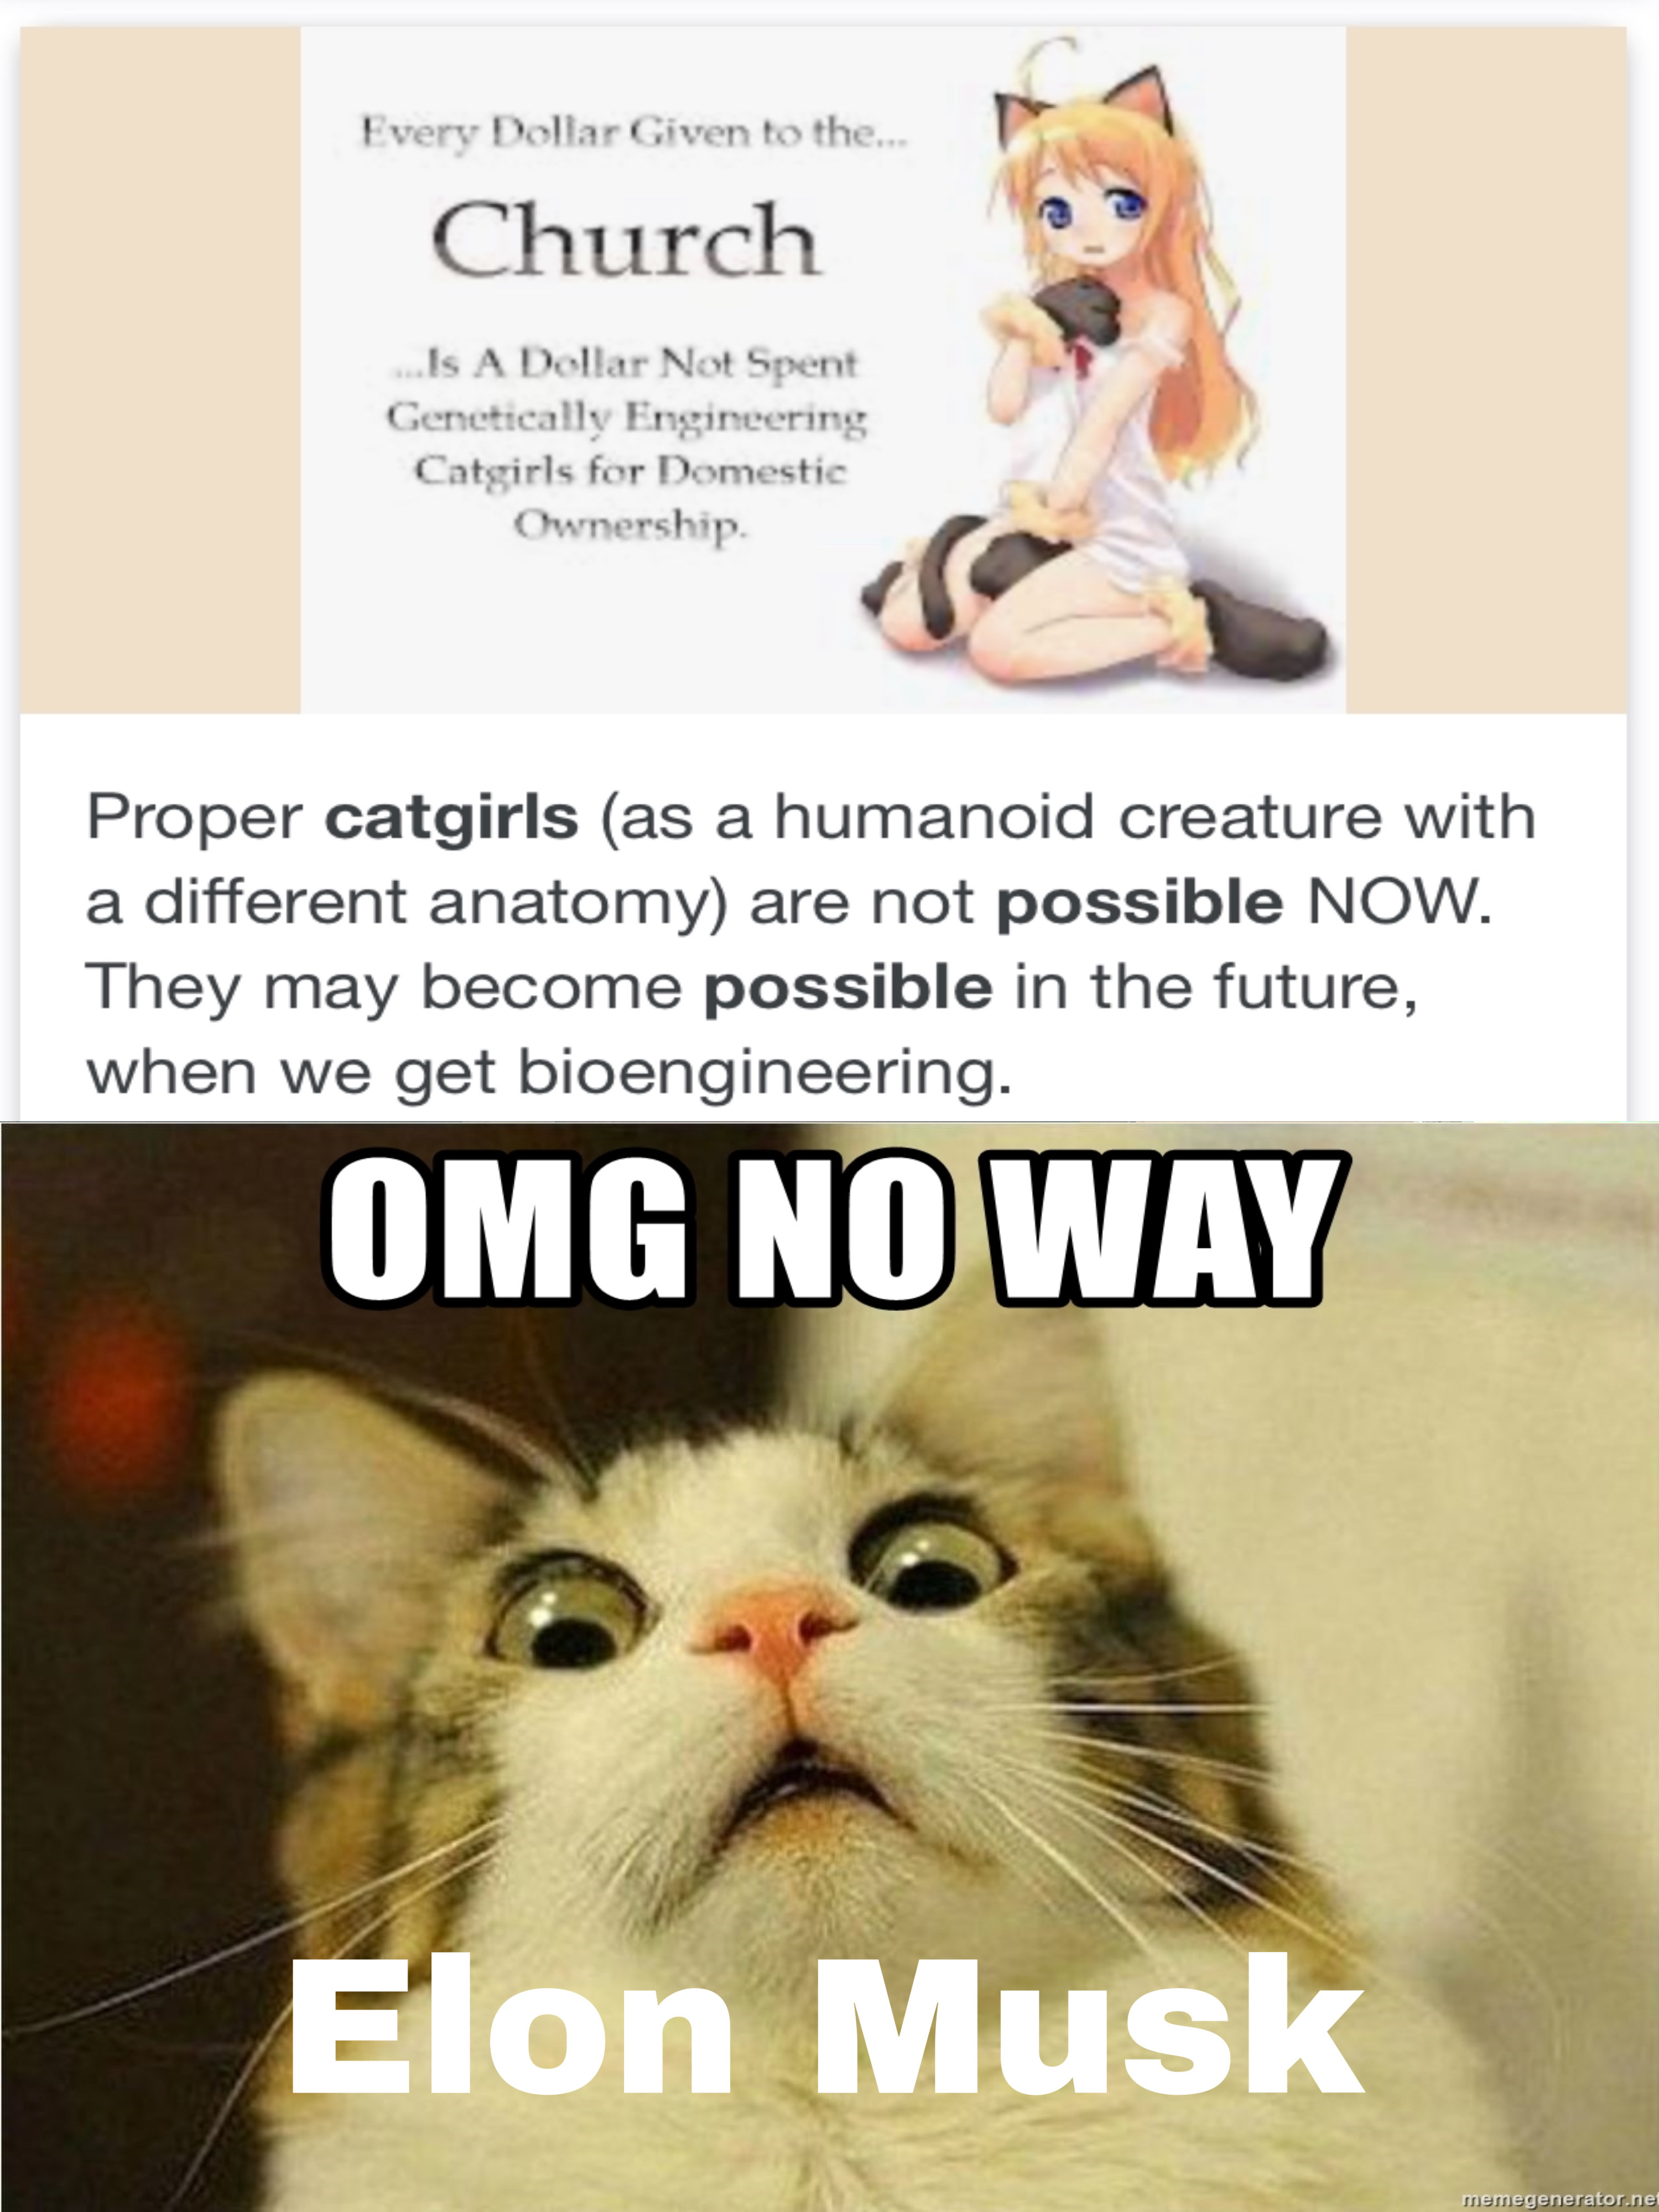 Genetically engineered catgirls : r/memes